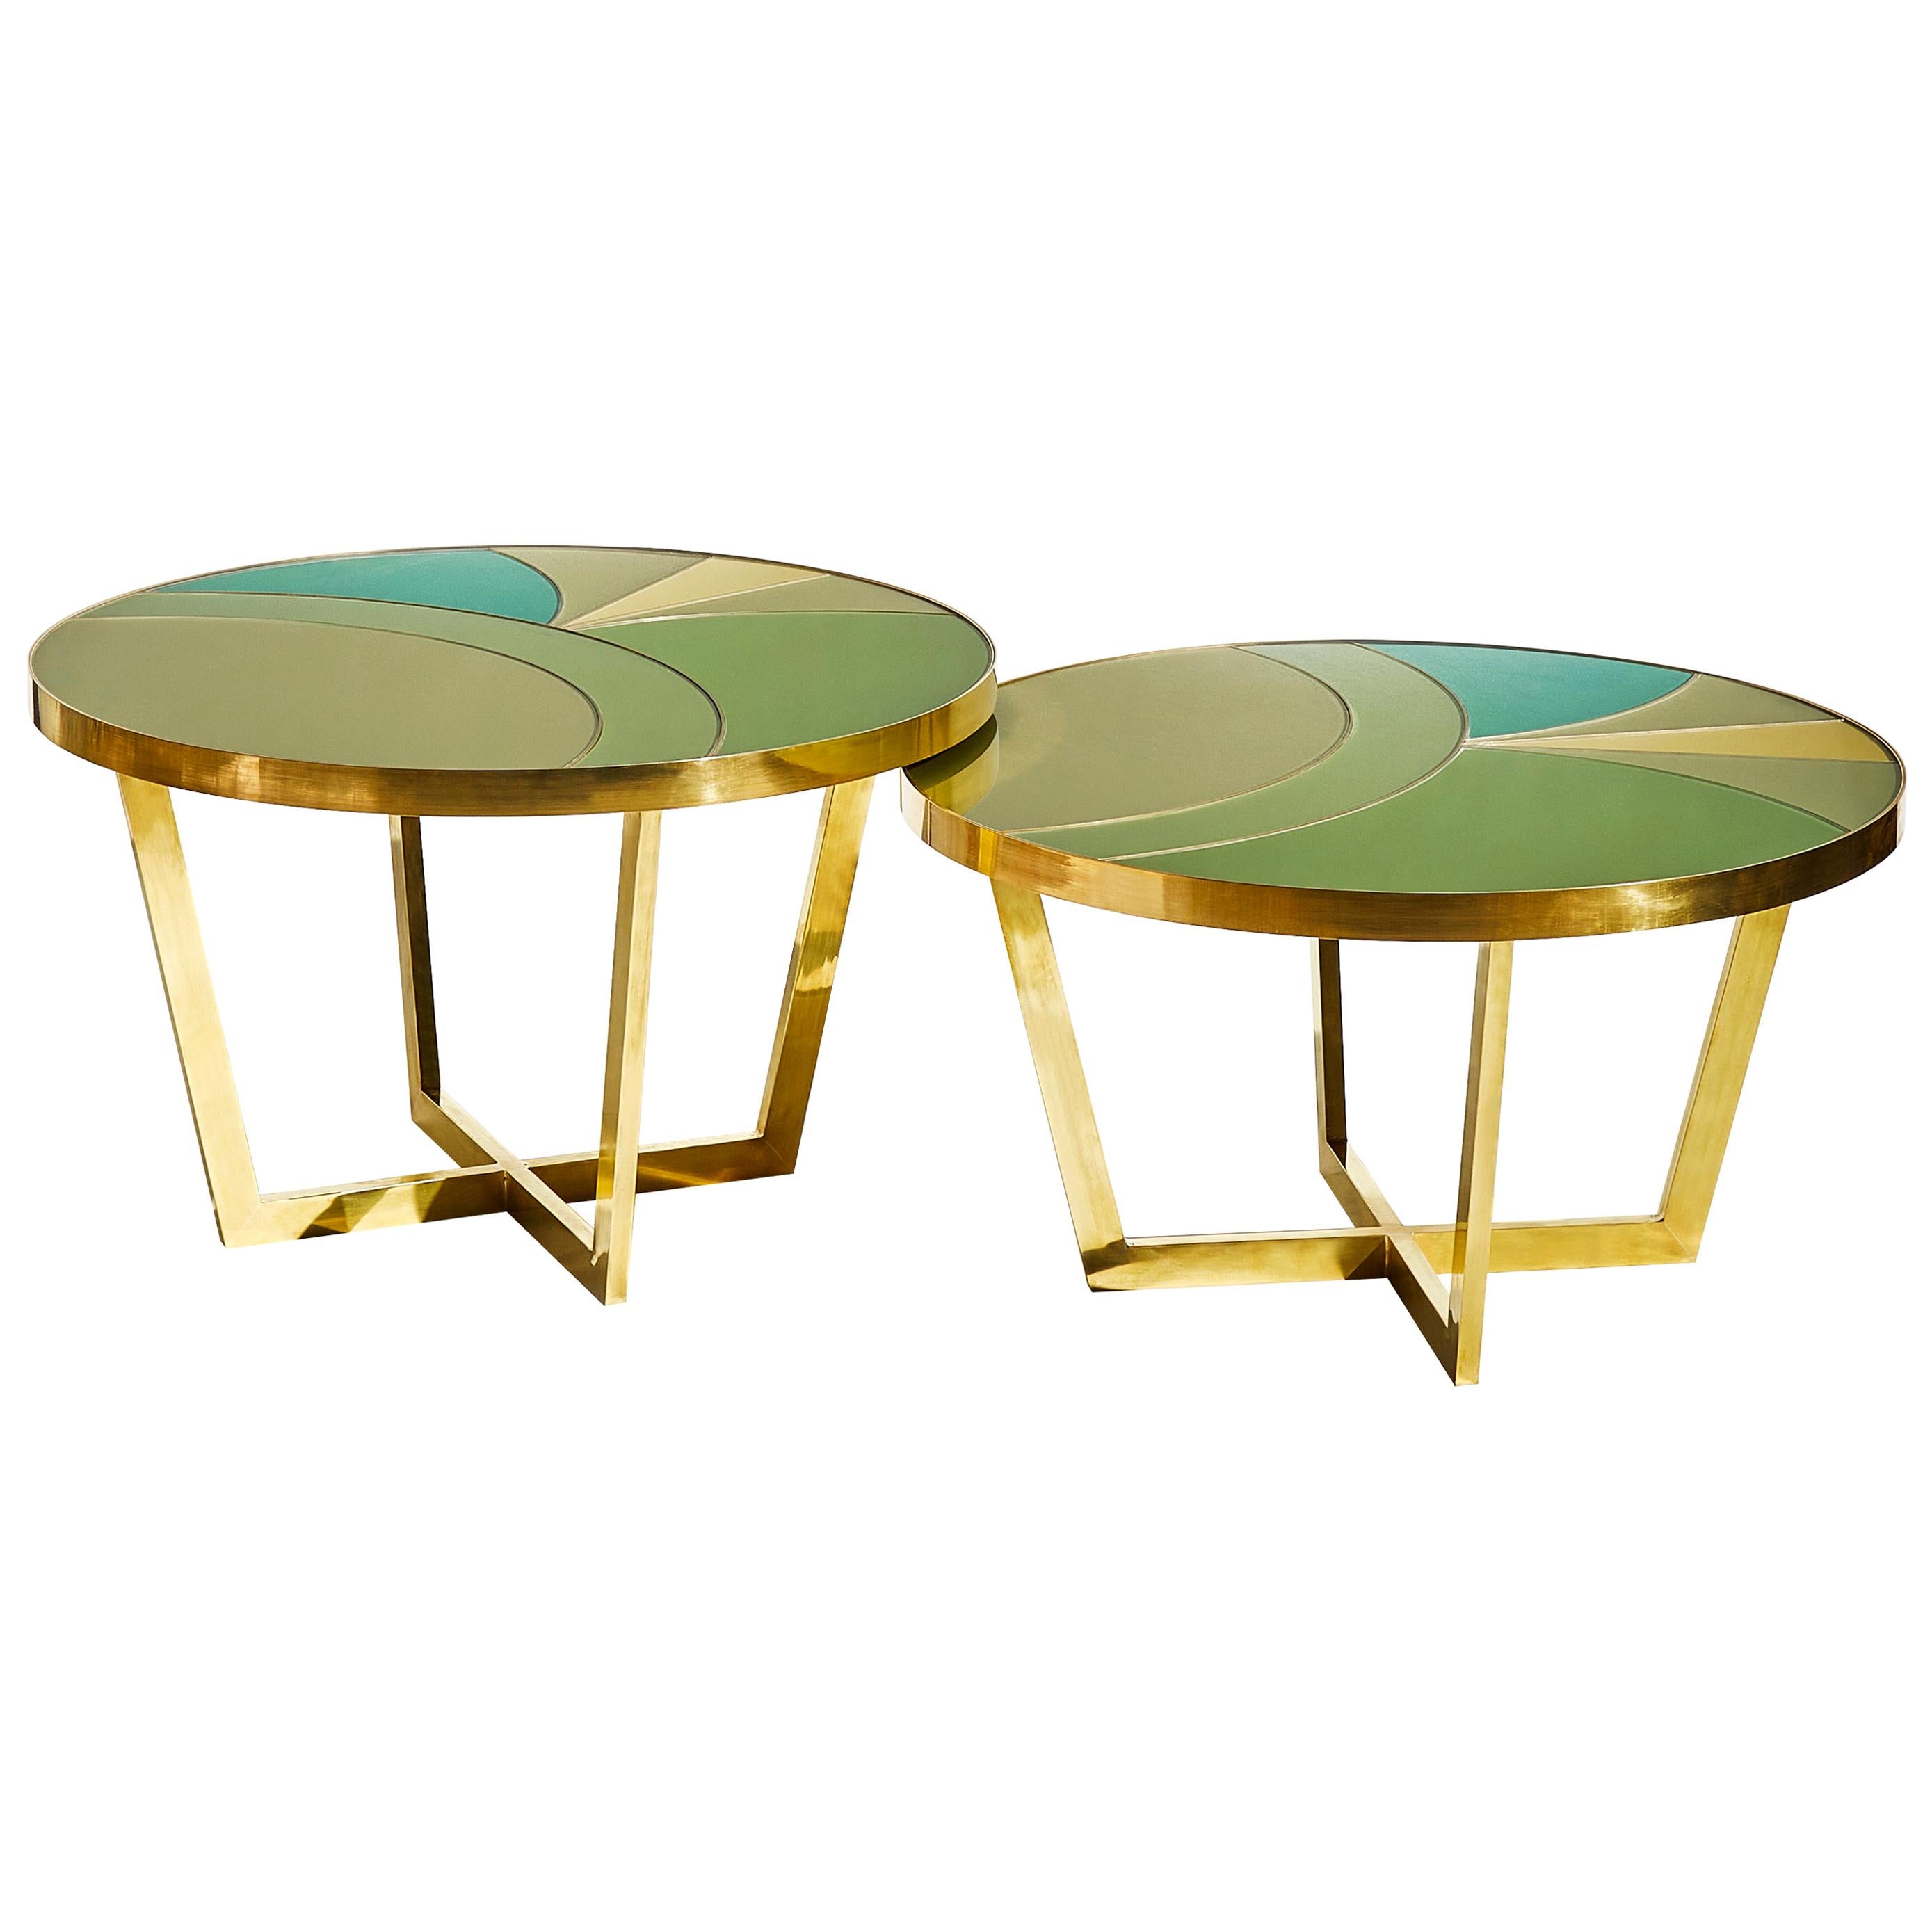 Pair of Coffee Tables in Mirror, by Studio Glustin